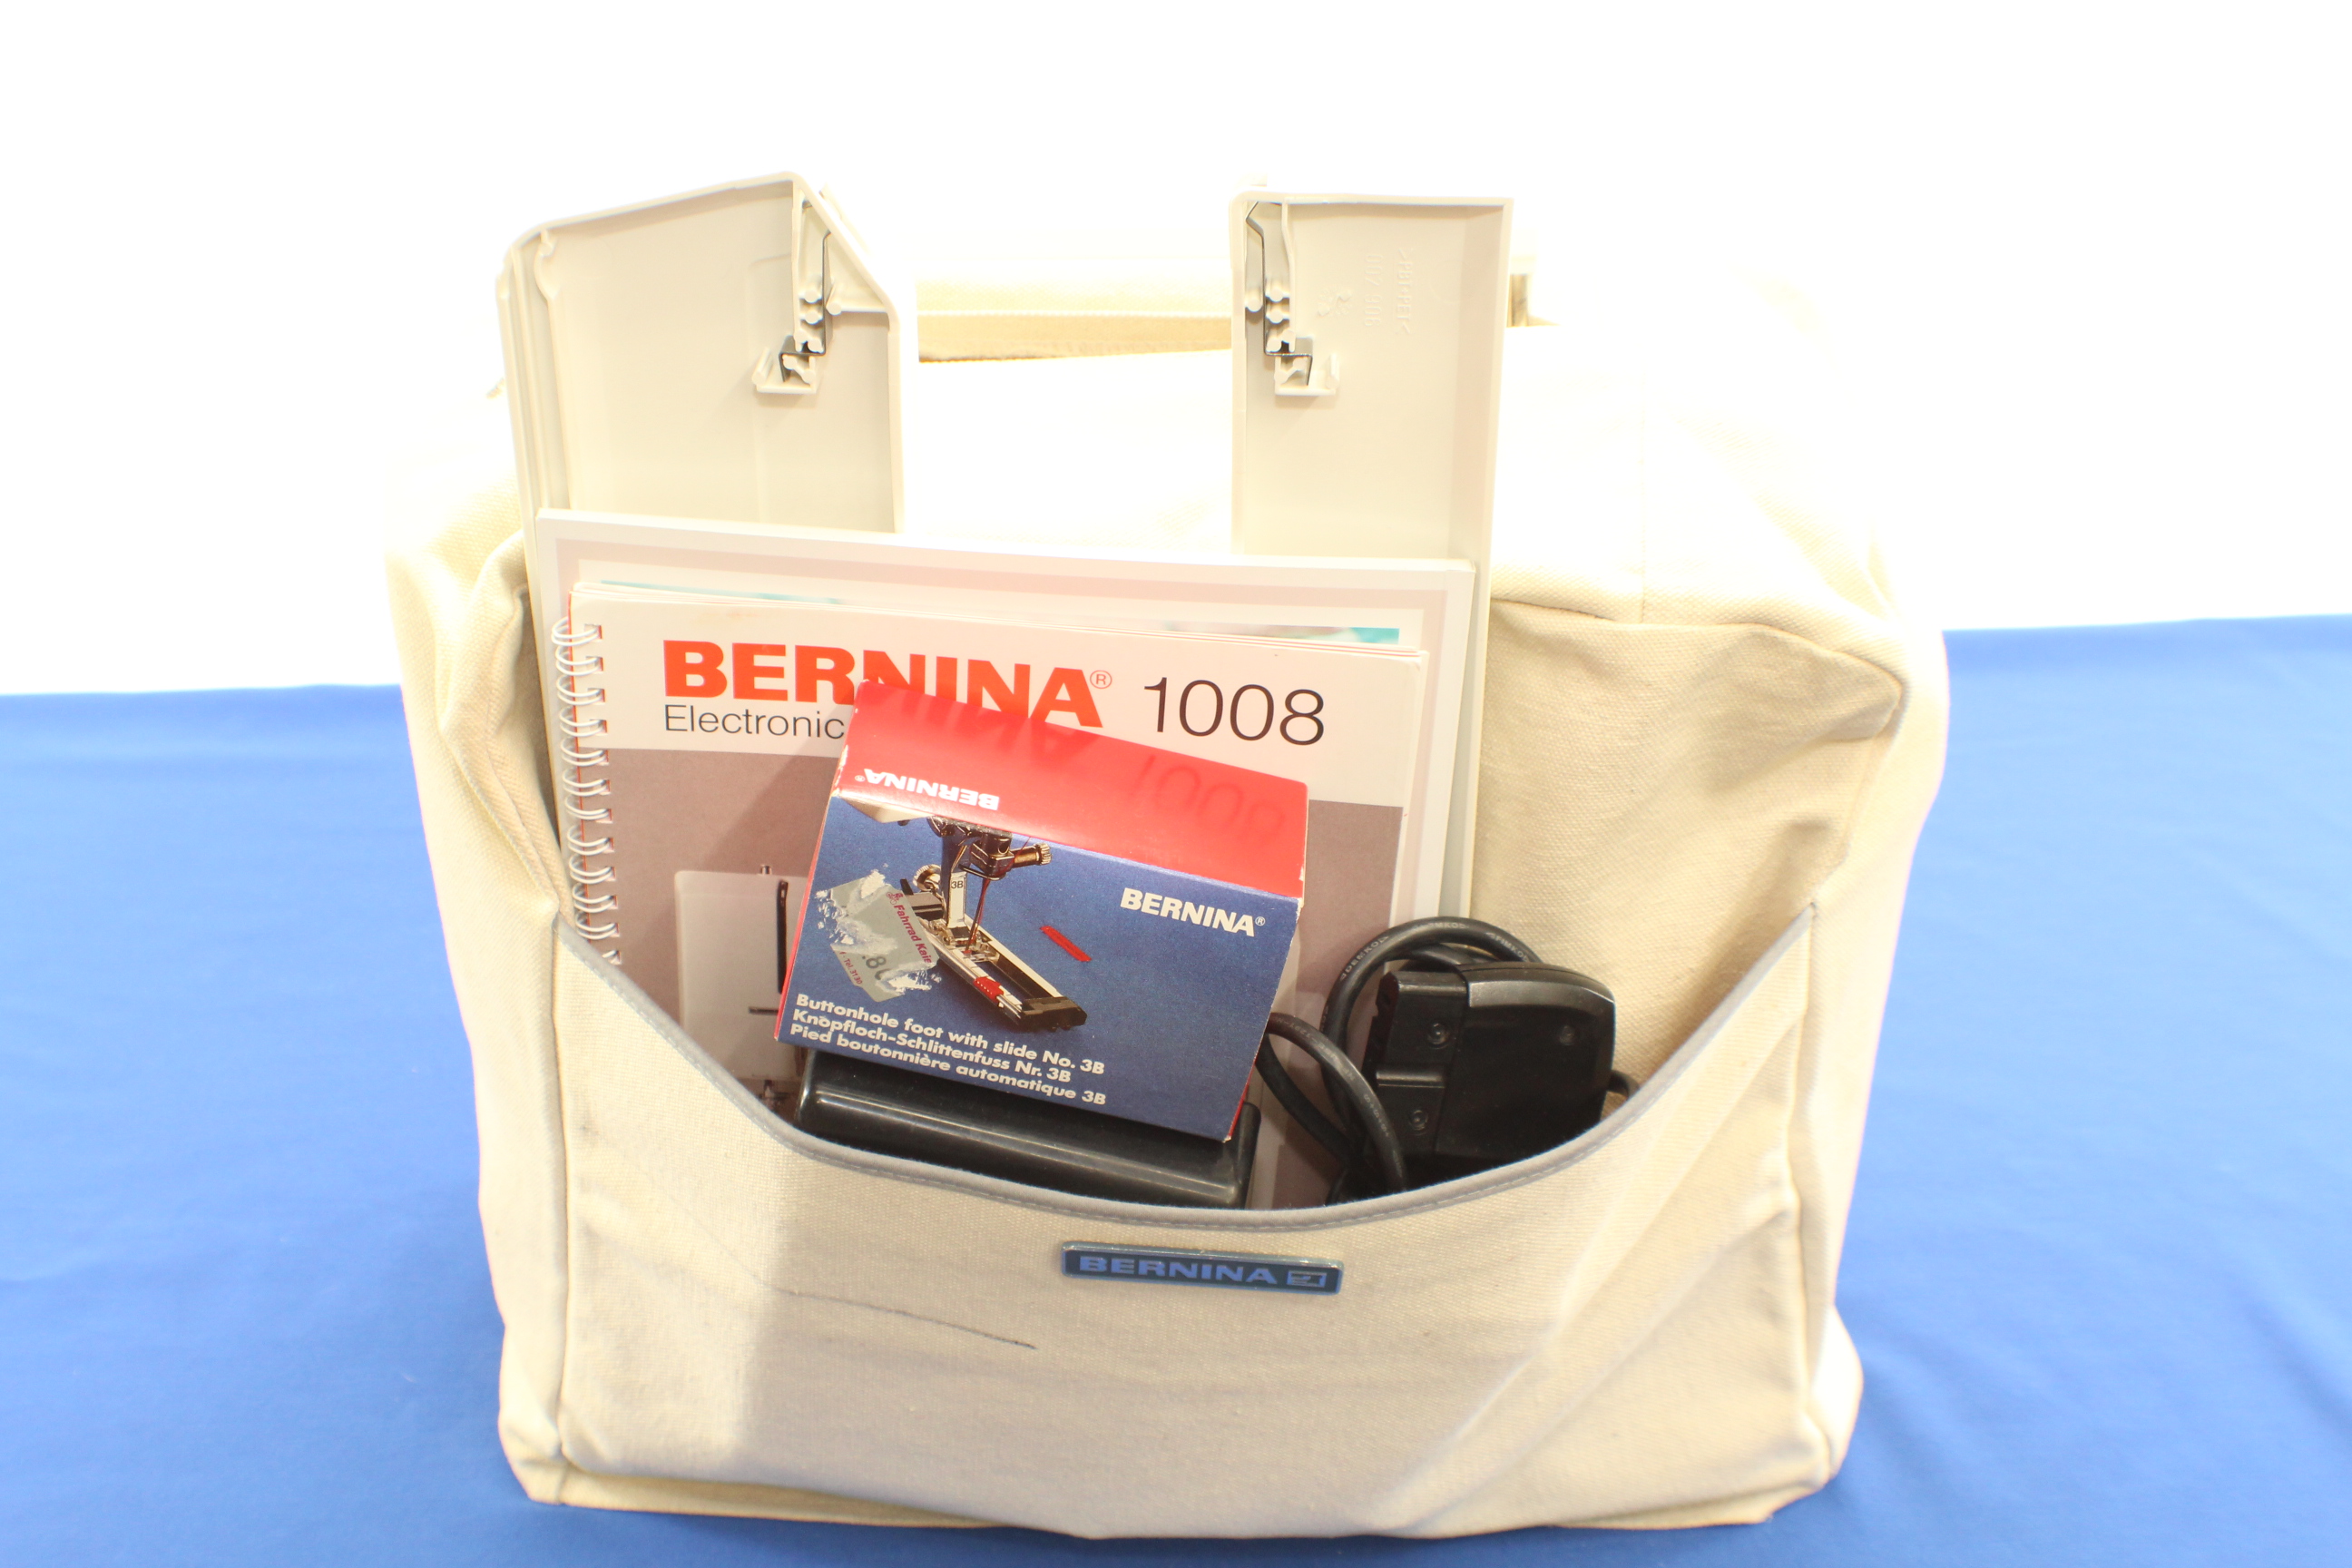 Bernina 1008 Second-Hand Seriennummer 006 250 8001 